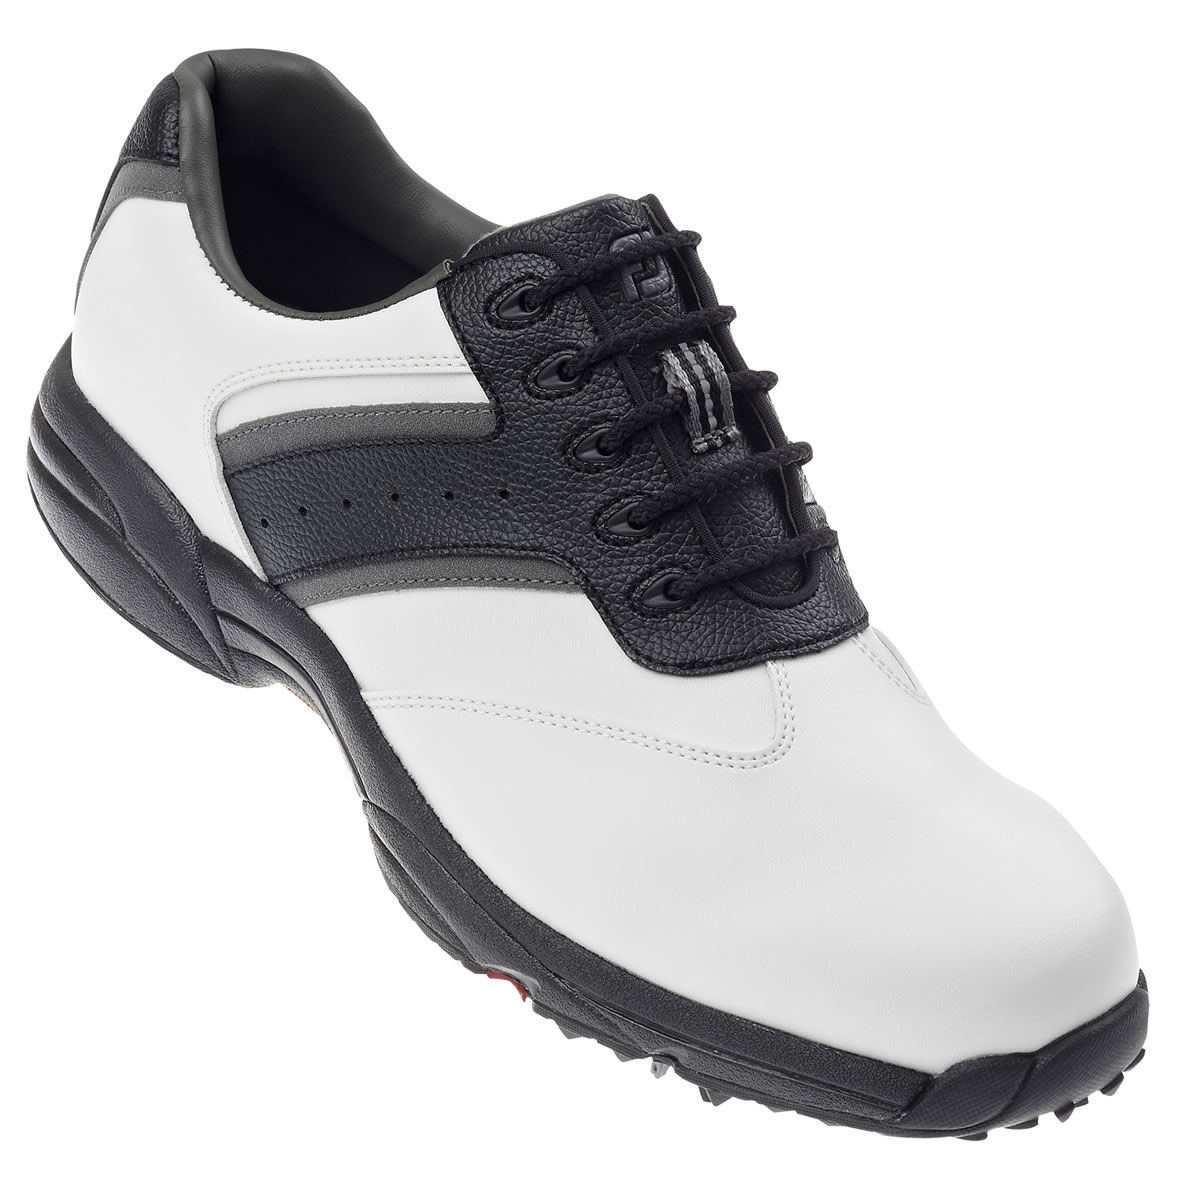 FootJoy GreenJoys Golf Shoes White/Black #45411